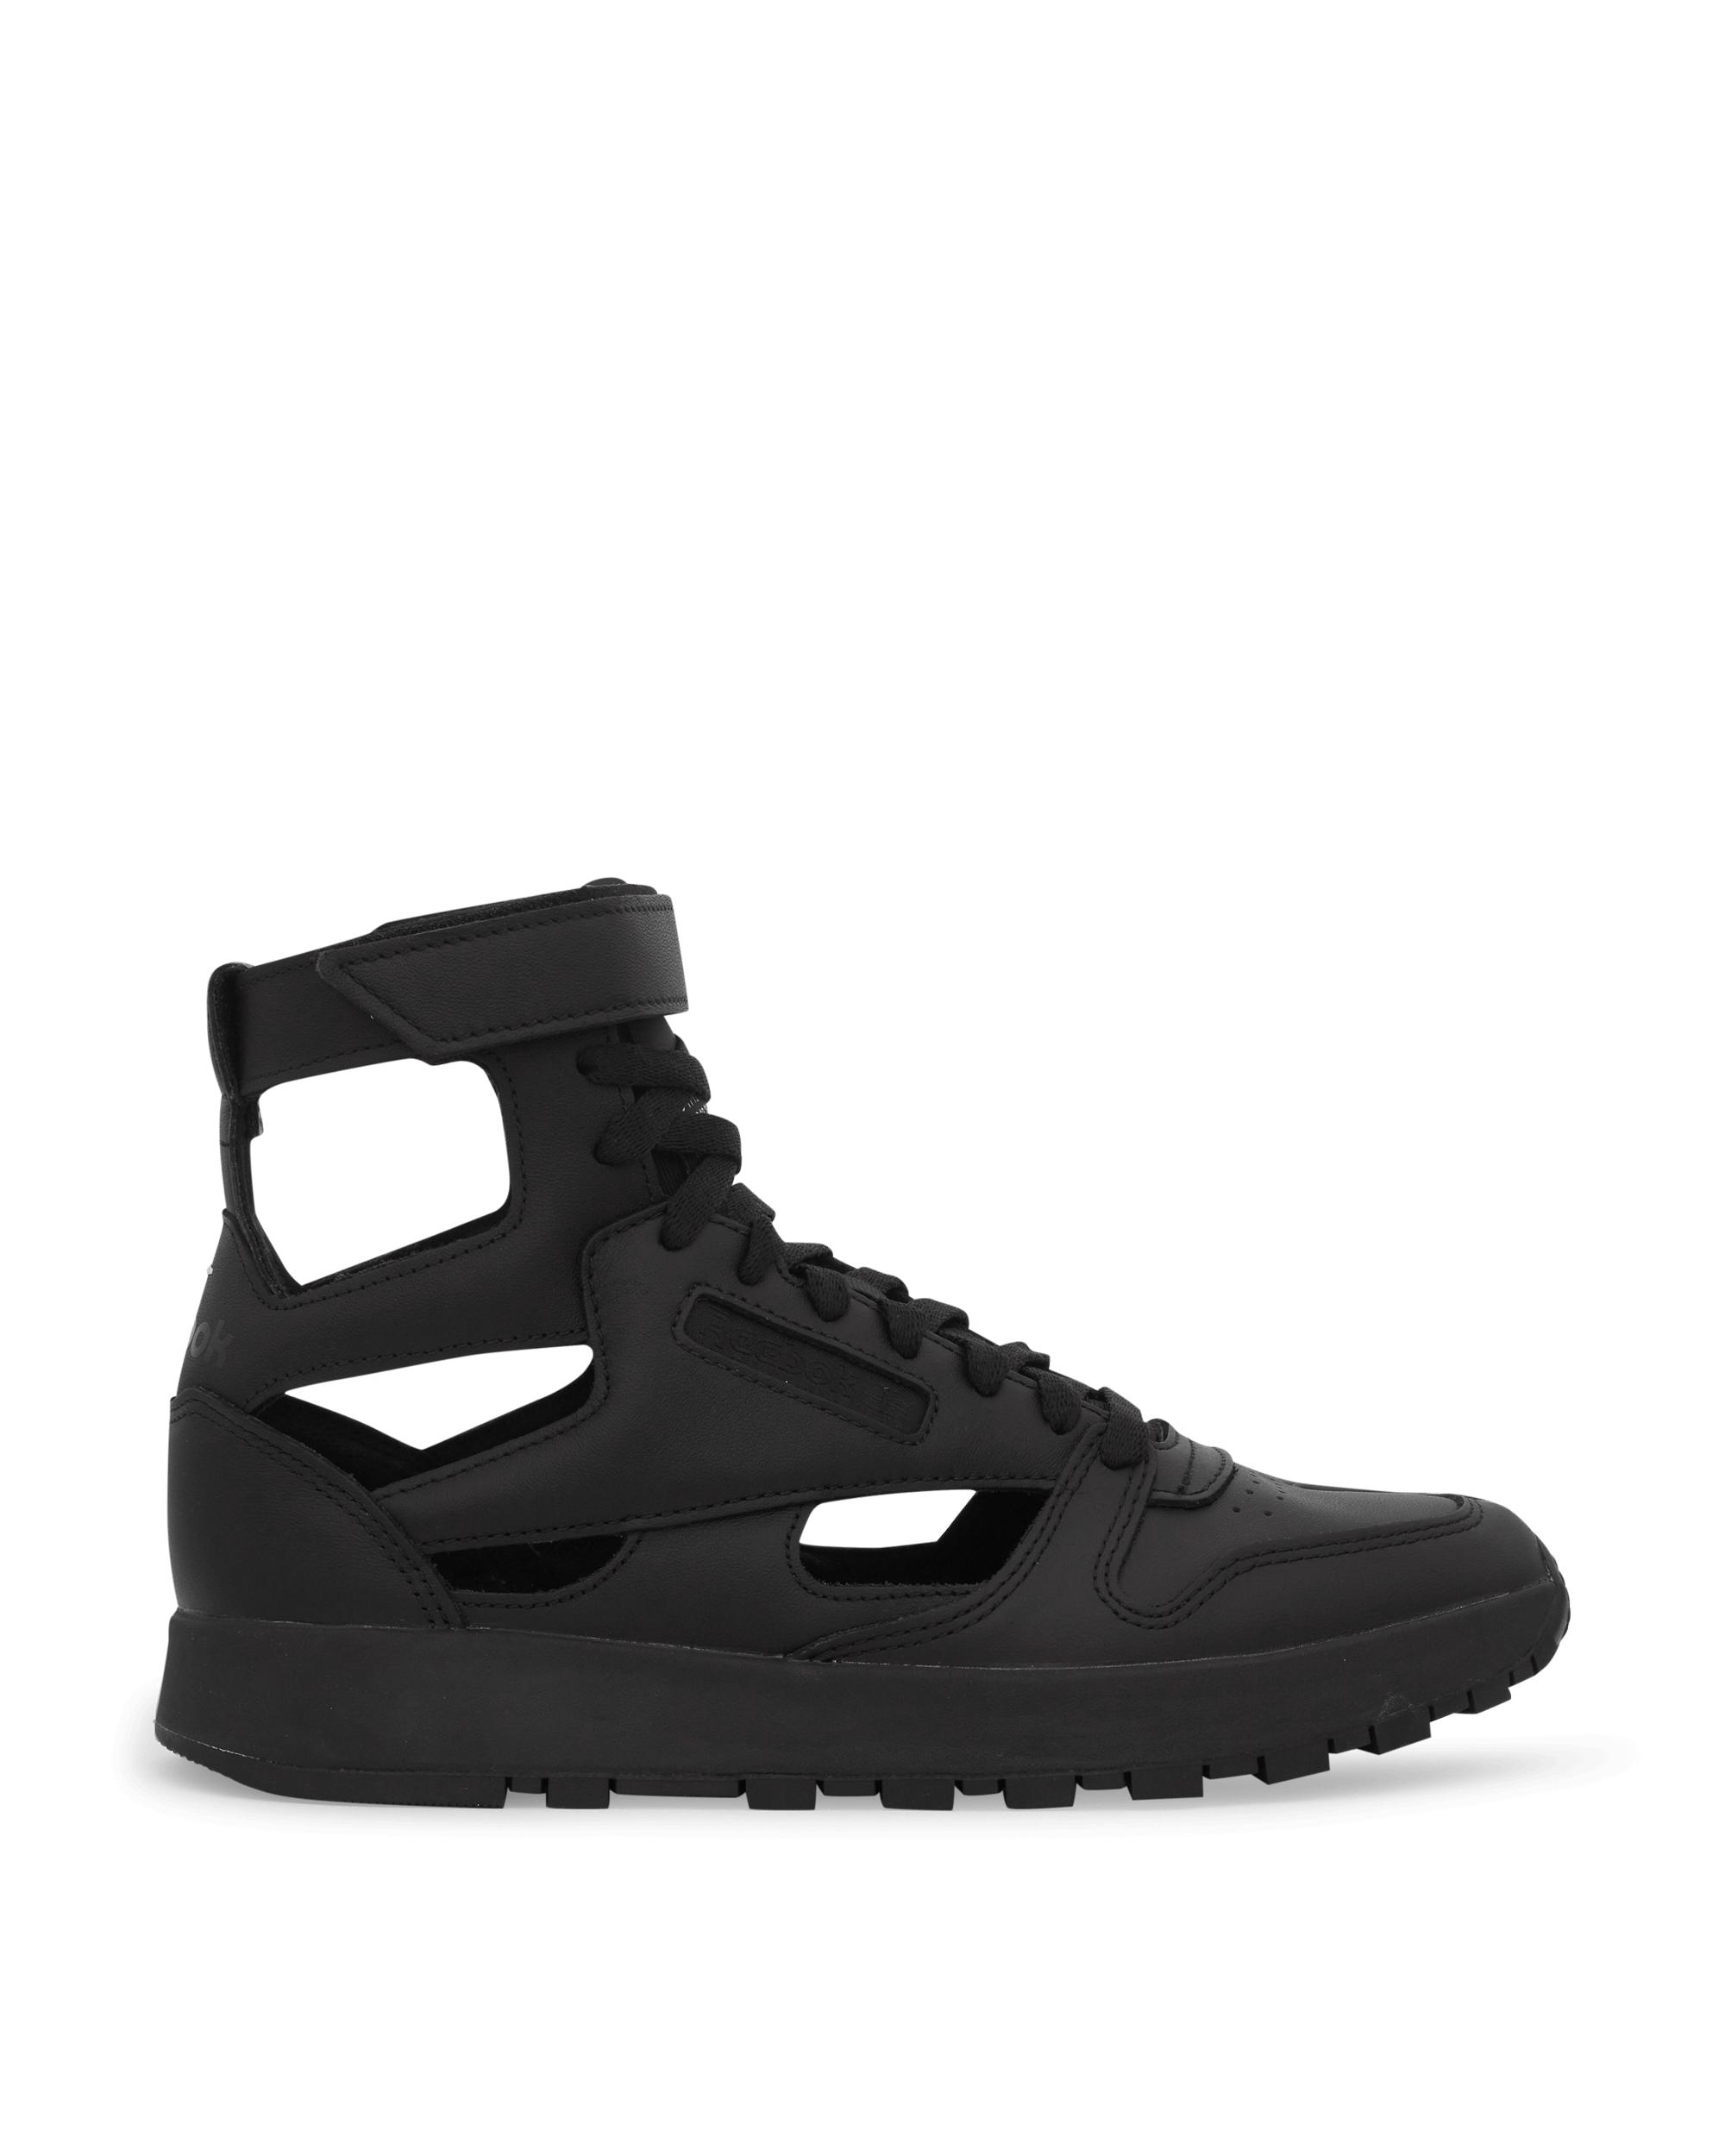 tackle Hejse Altid Maison Margiela Reebok Classic Leather Tabi Hi Sneakers in Black for Men -  Lyst